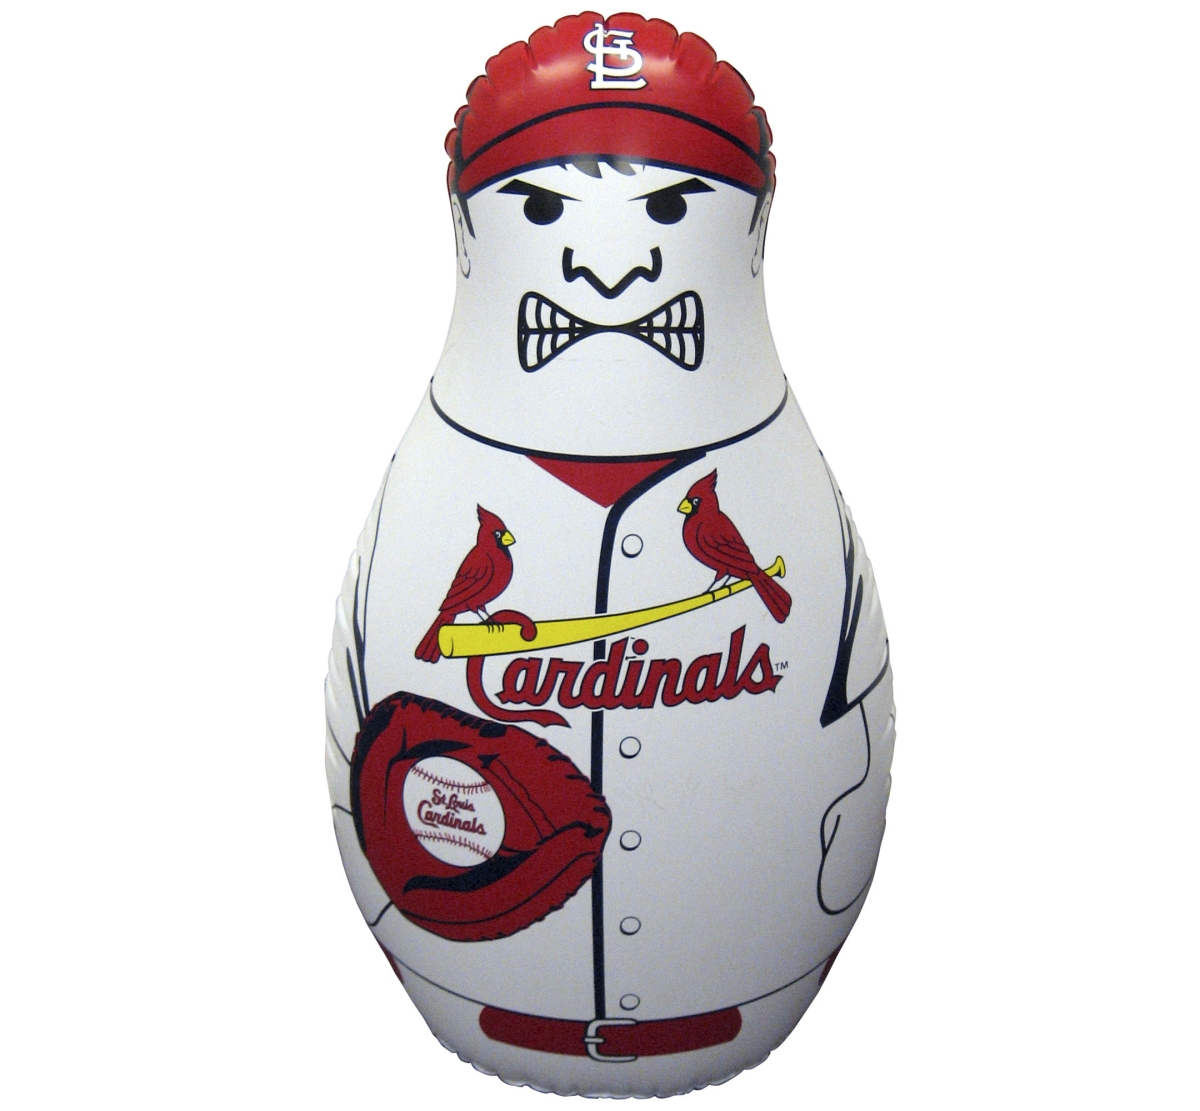 Picture of Fremont Die 023245675246 MLB St. Louis Cardinals Bop Bag